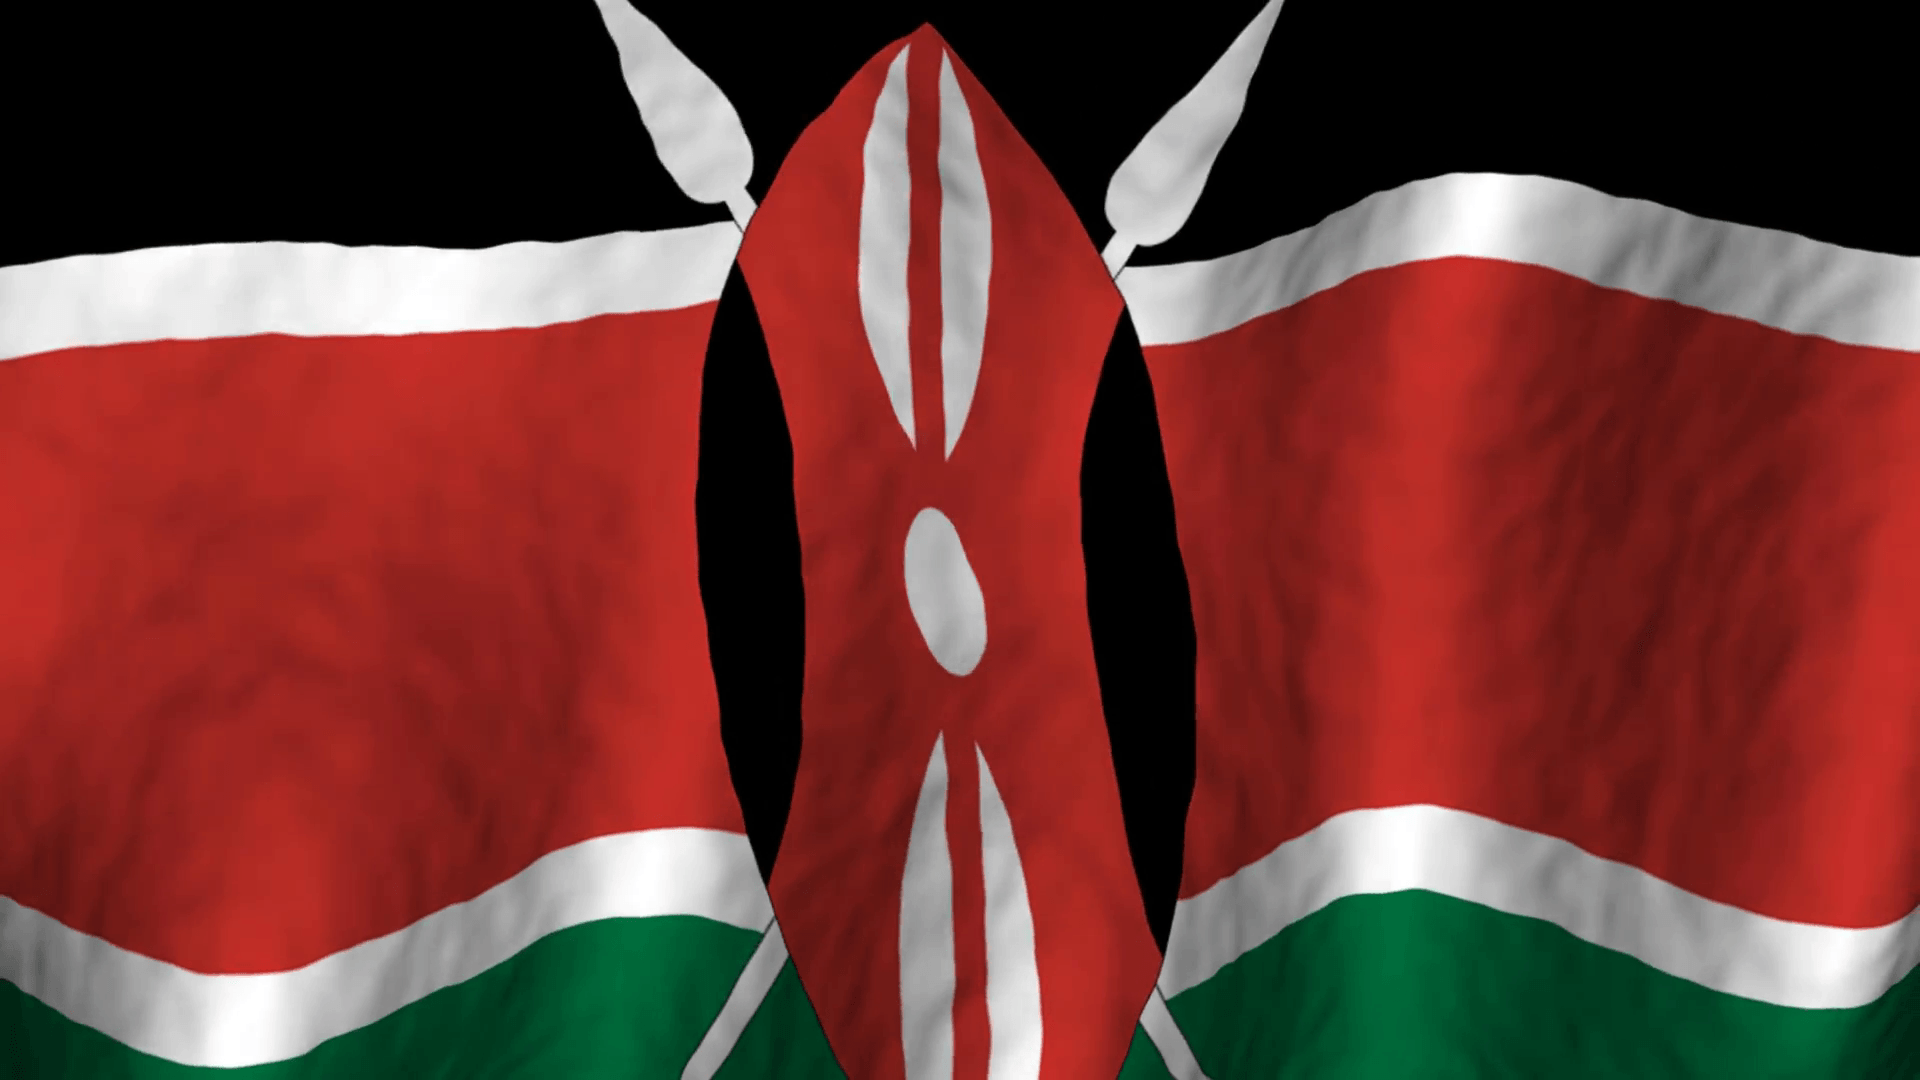 Kenya Flag Wallpaper. (44++ Wallpaper)